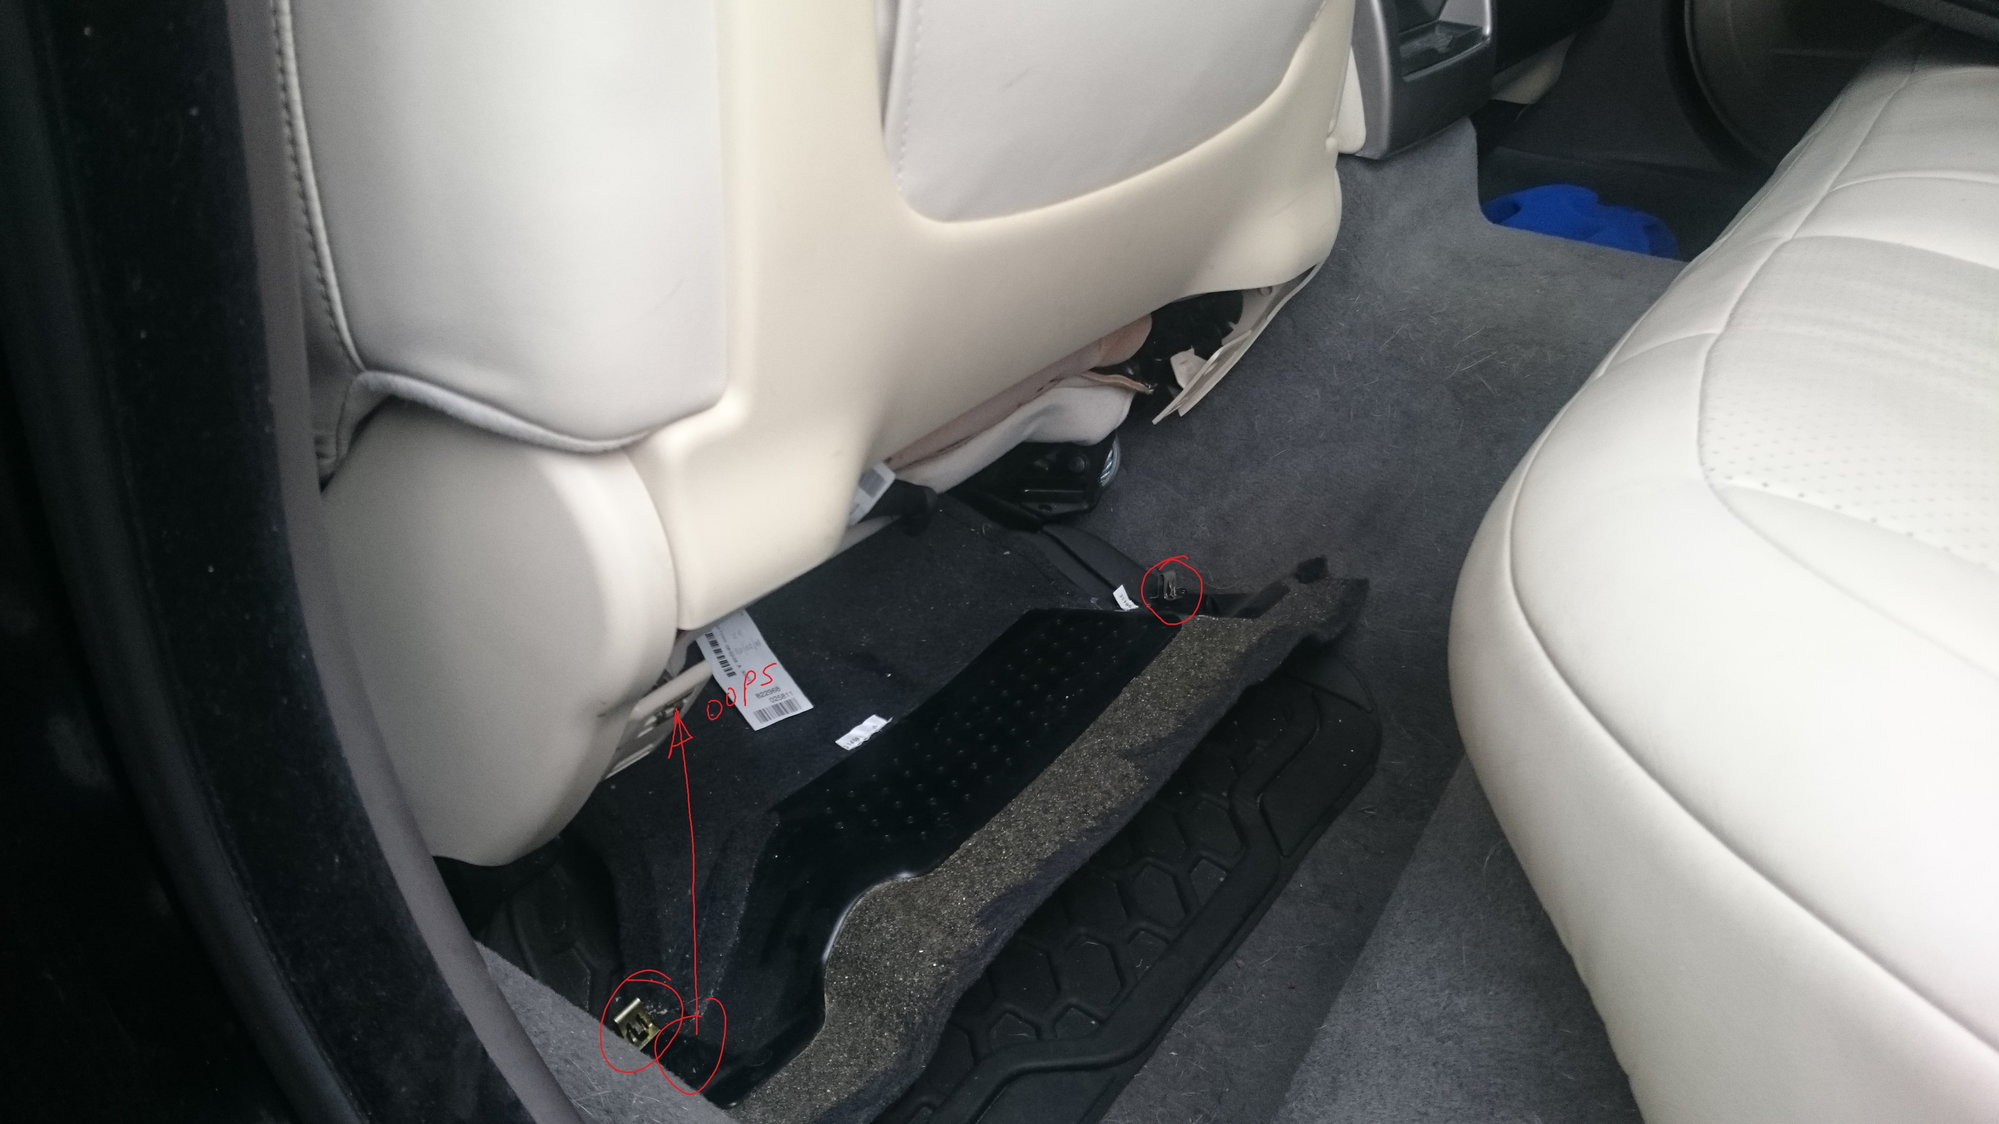 Cooled seat back DIY -Failed fan or filter replacement - Jaguar Forums - Jaguar Enthusiasts Forum